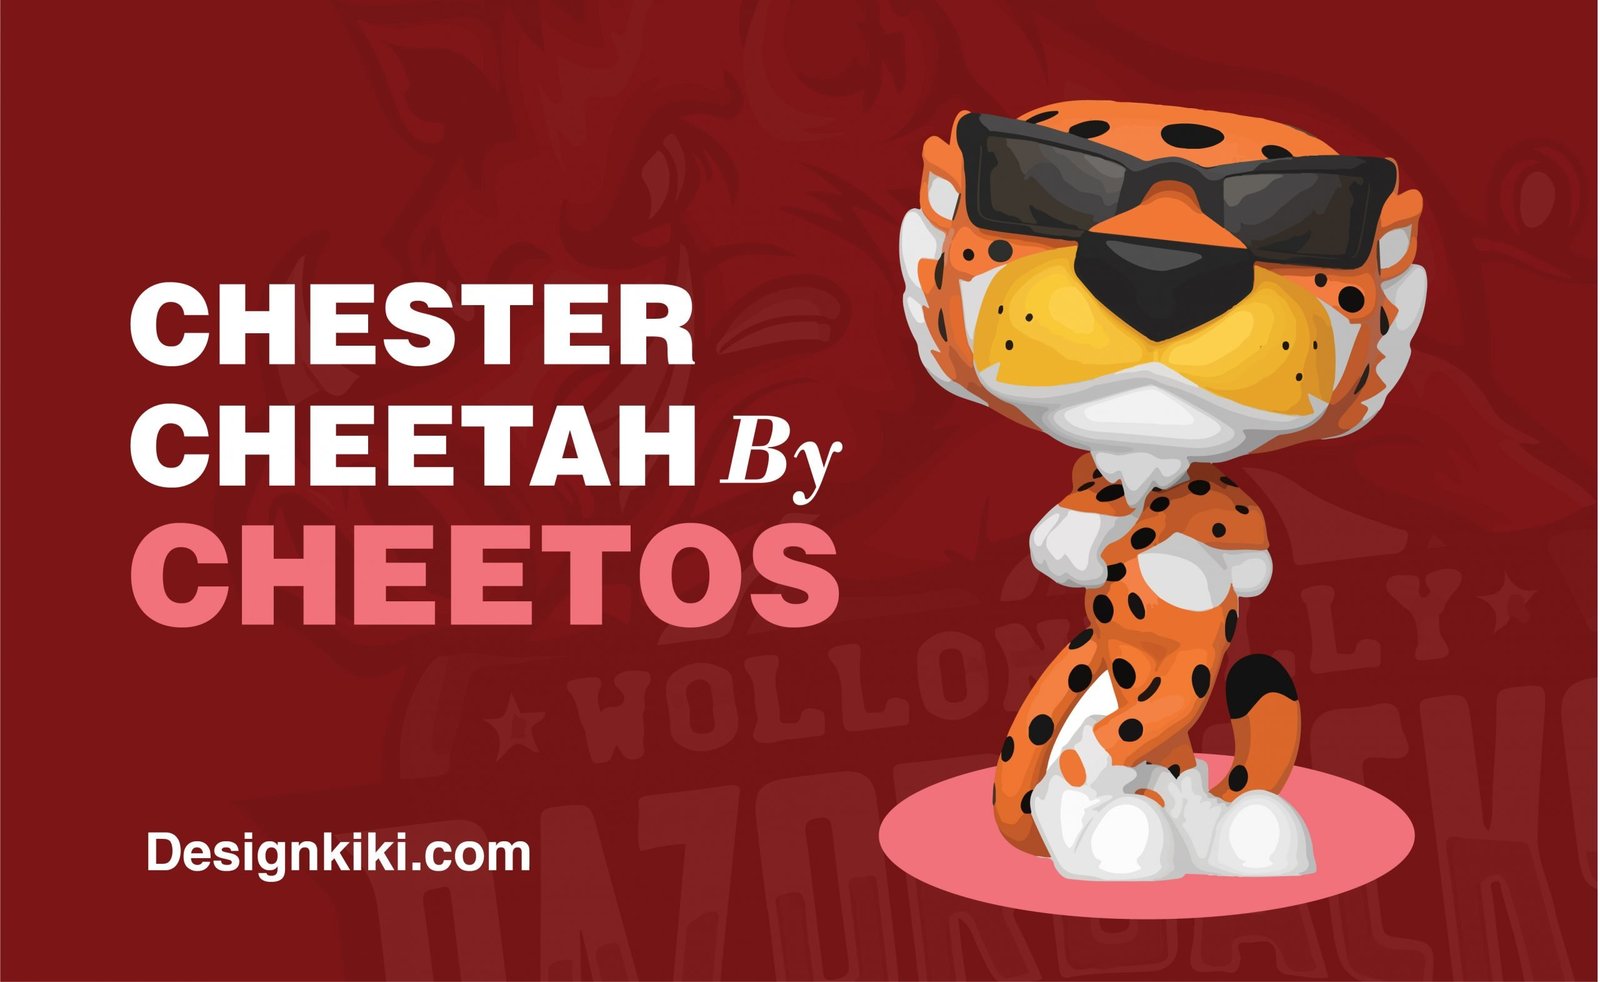 Cheetos mascot logos